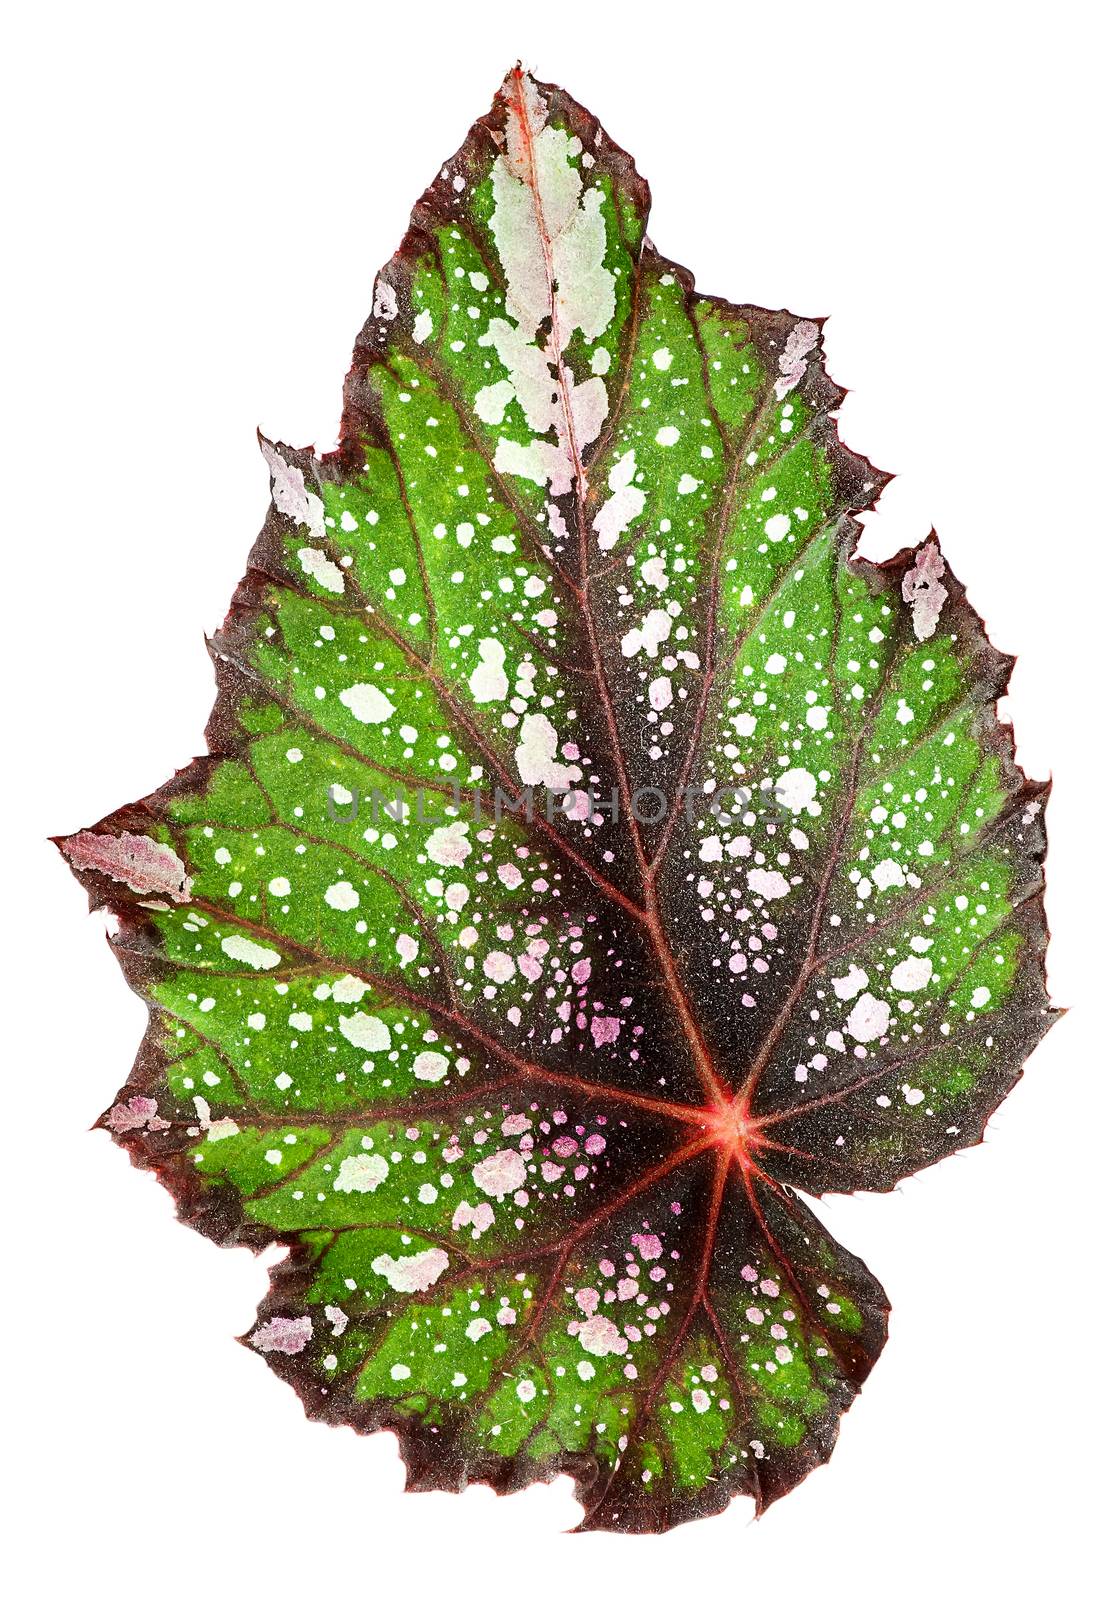 Begonia leaf vertically isolated on white background